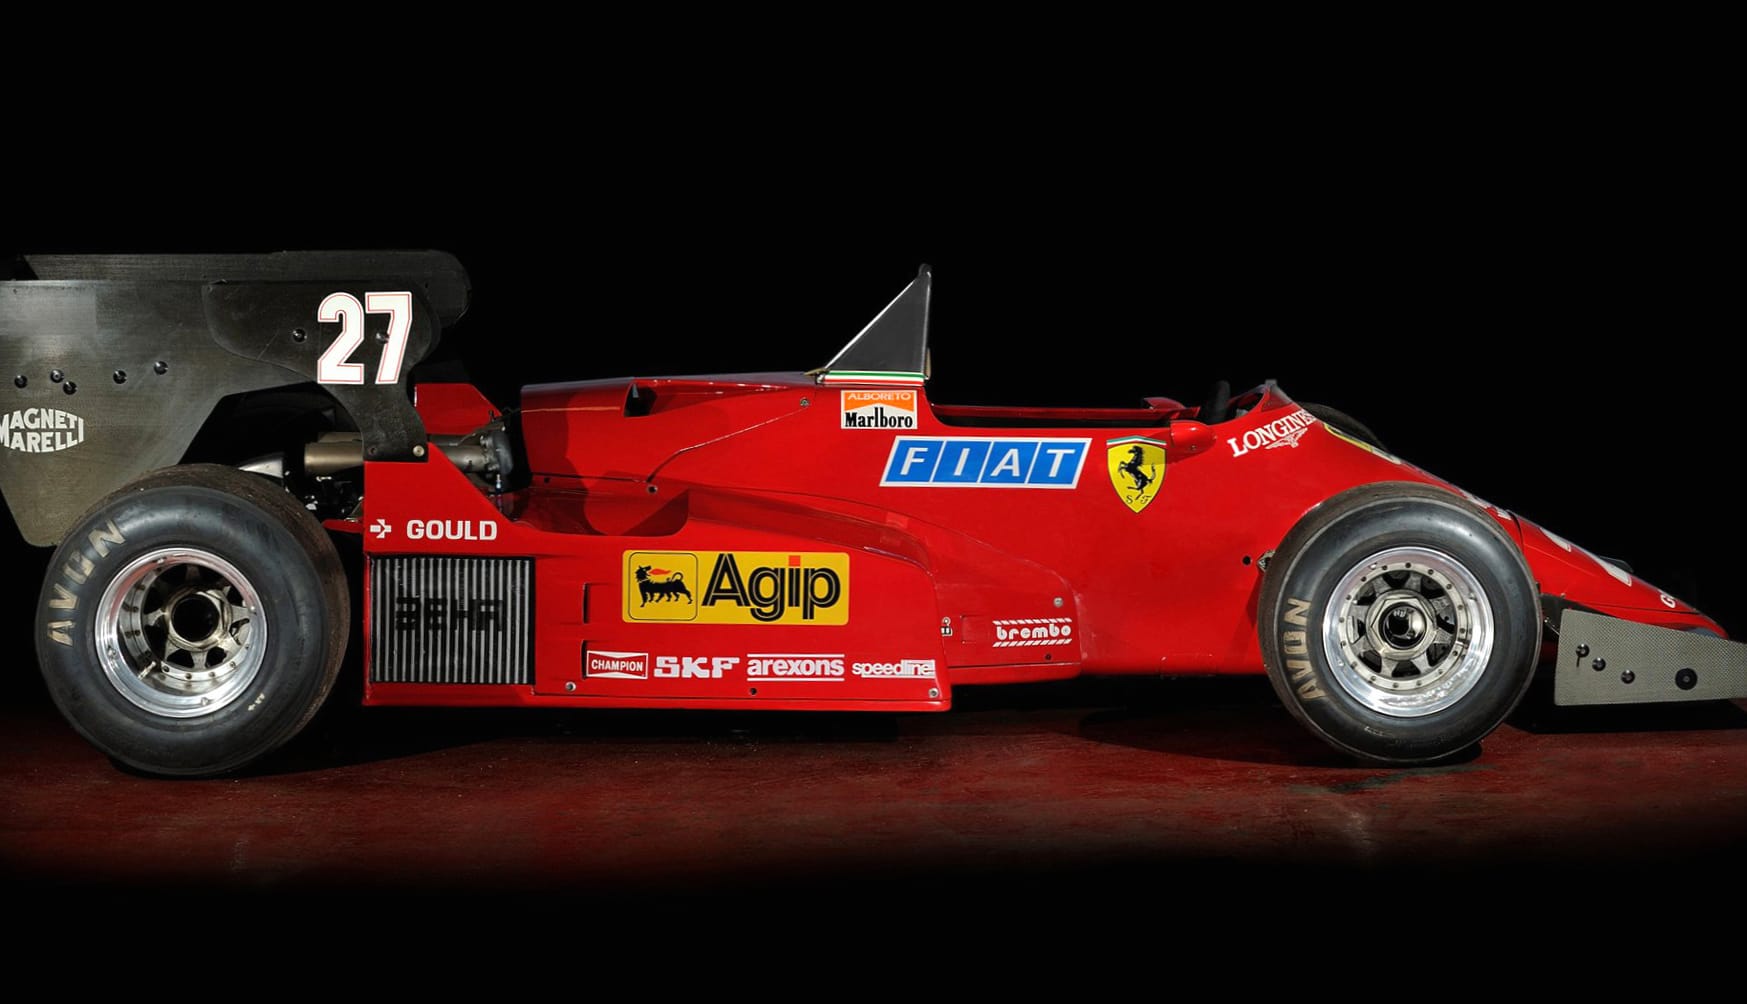 Ferrari 126 C4 at 1600 x 1200 size wallpapers HD quality